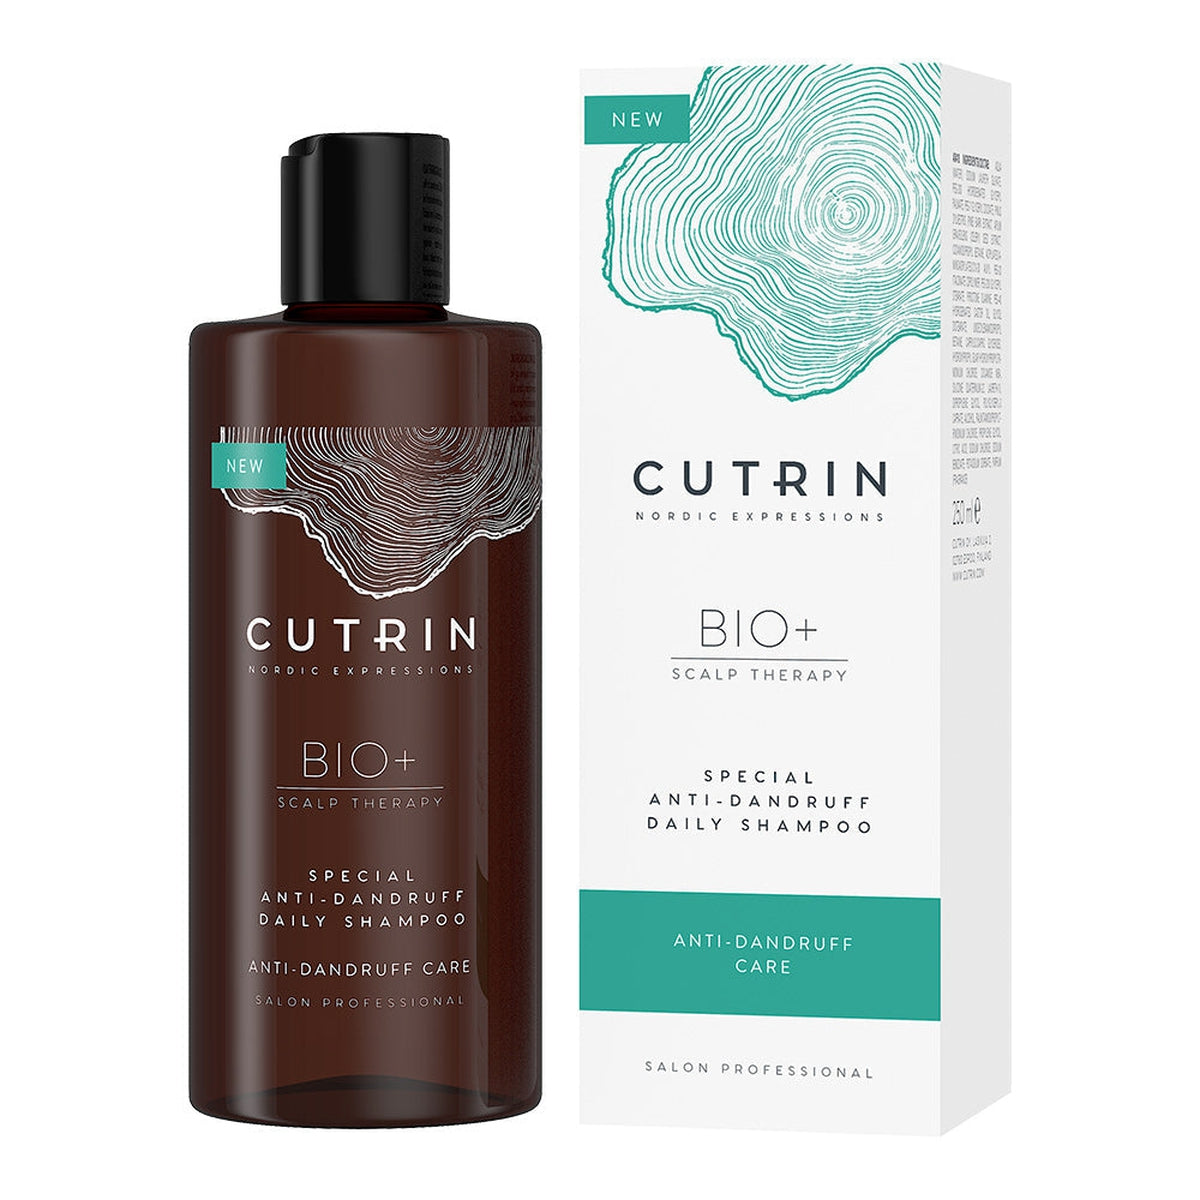 CUTRIN BIO+ Special Anti-Dandruff Daily Shampoo 250 ML